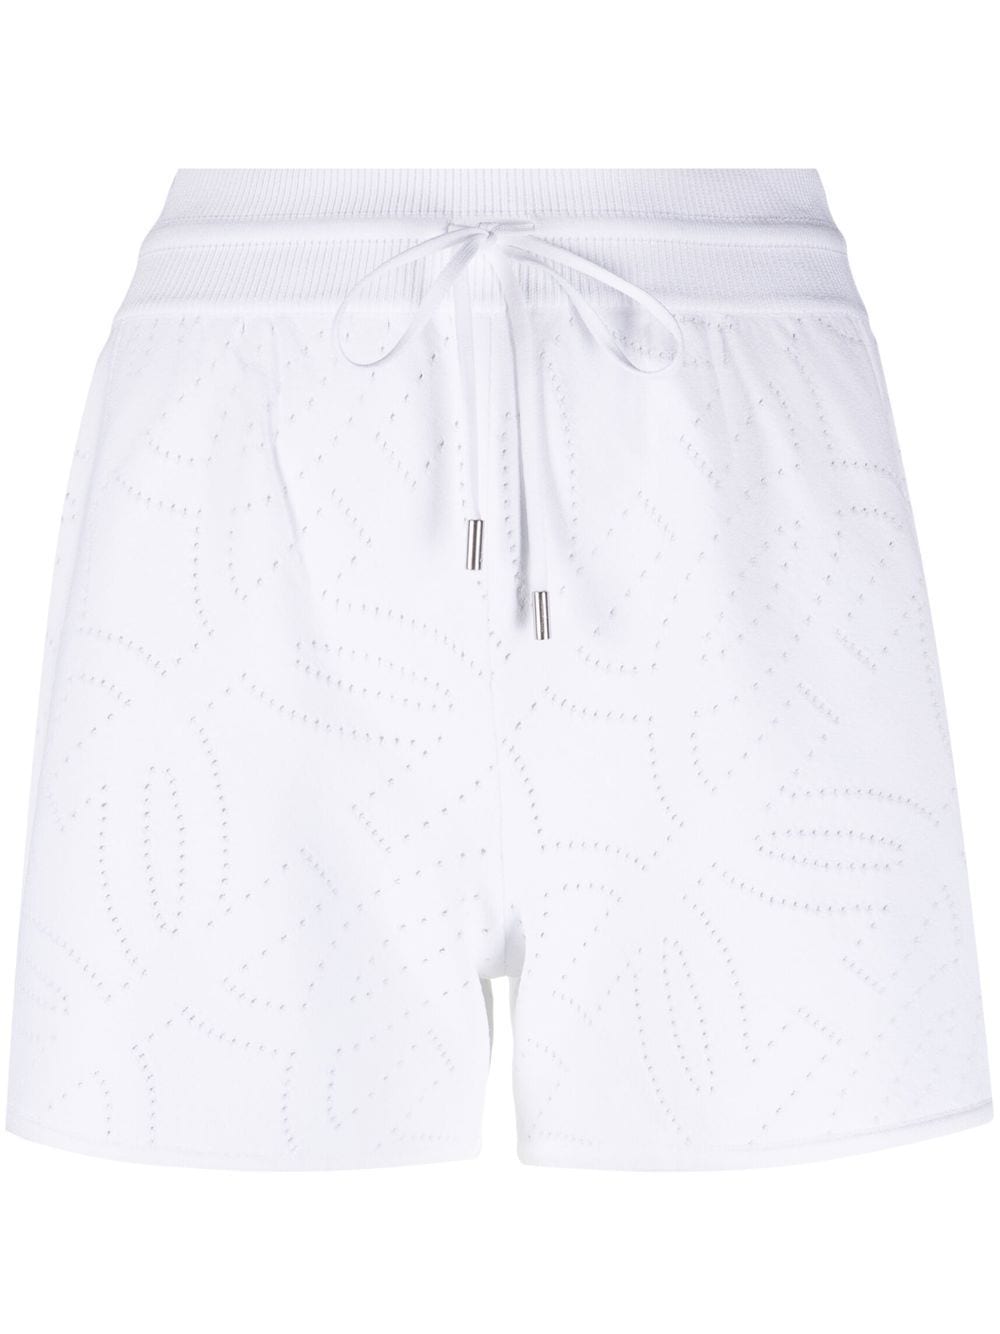 Ferragamo Gancio-perforated shorts - White